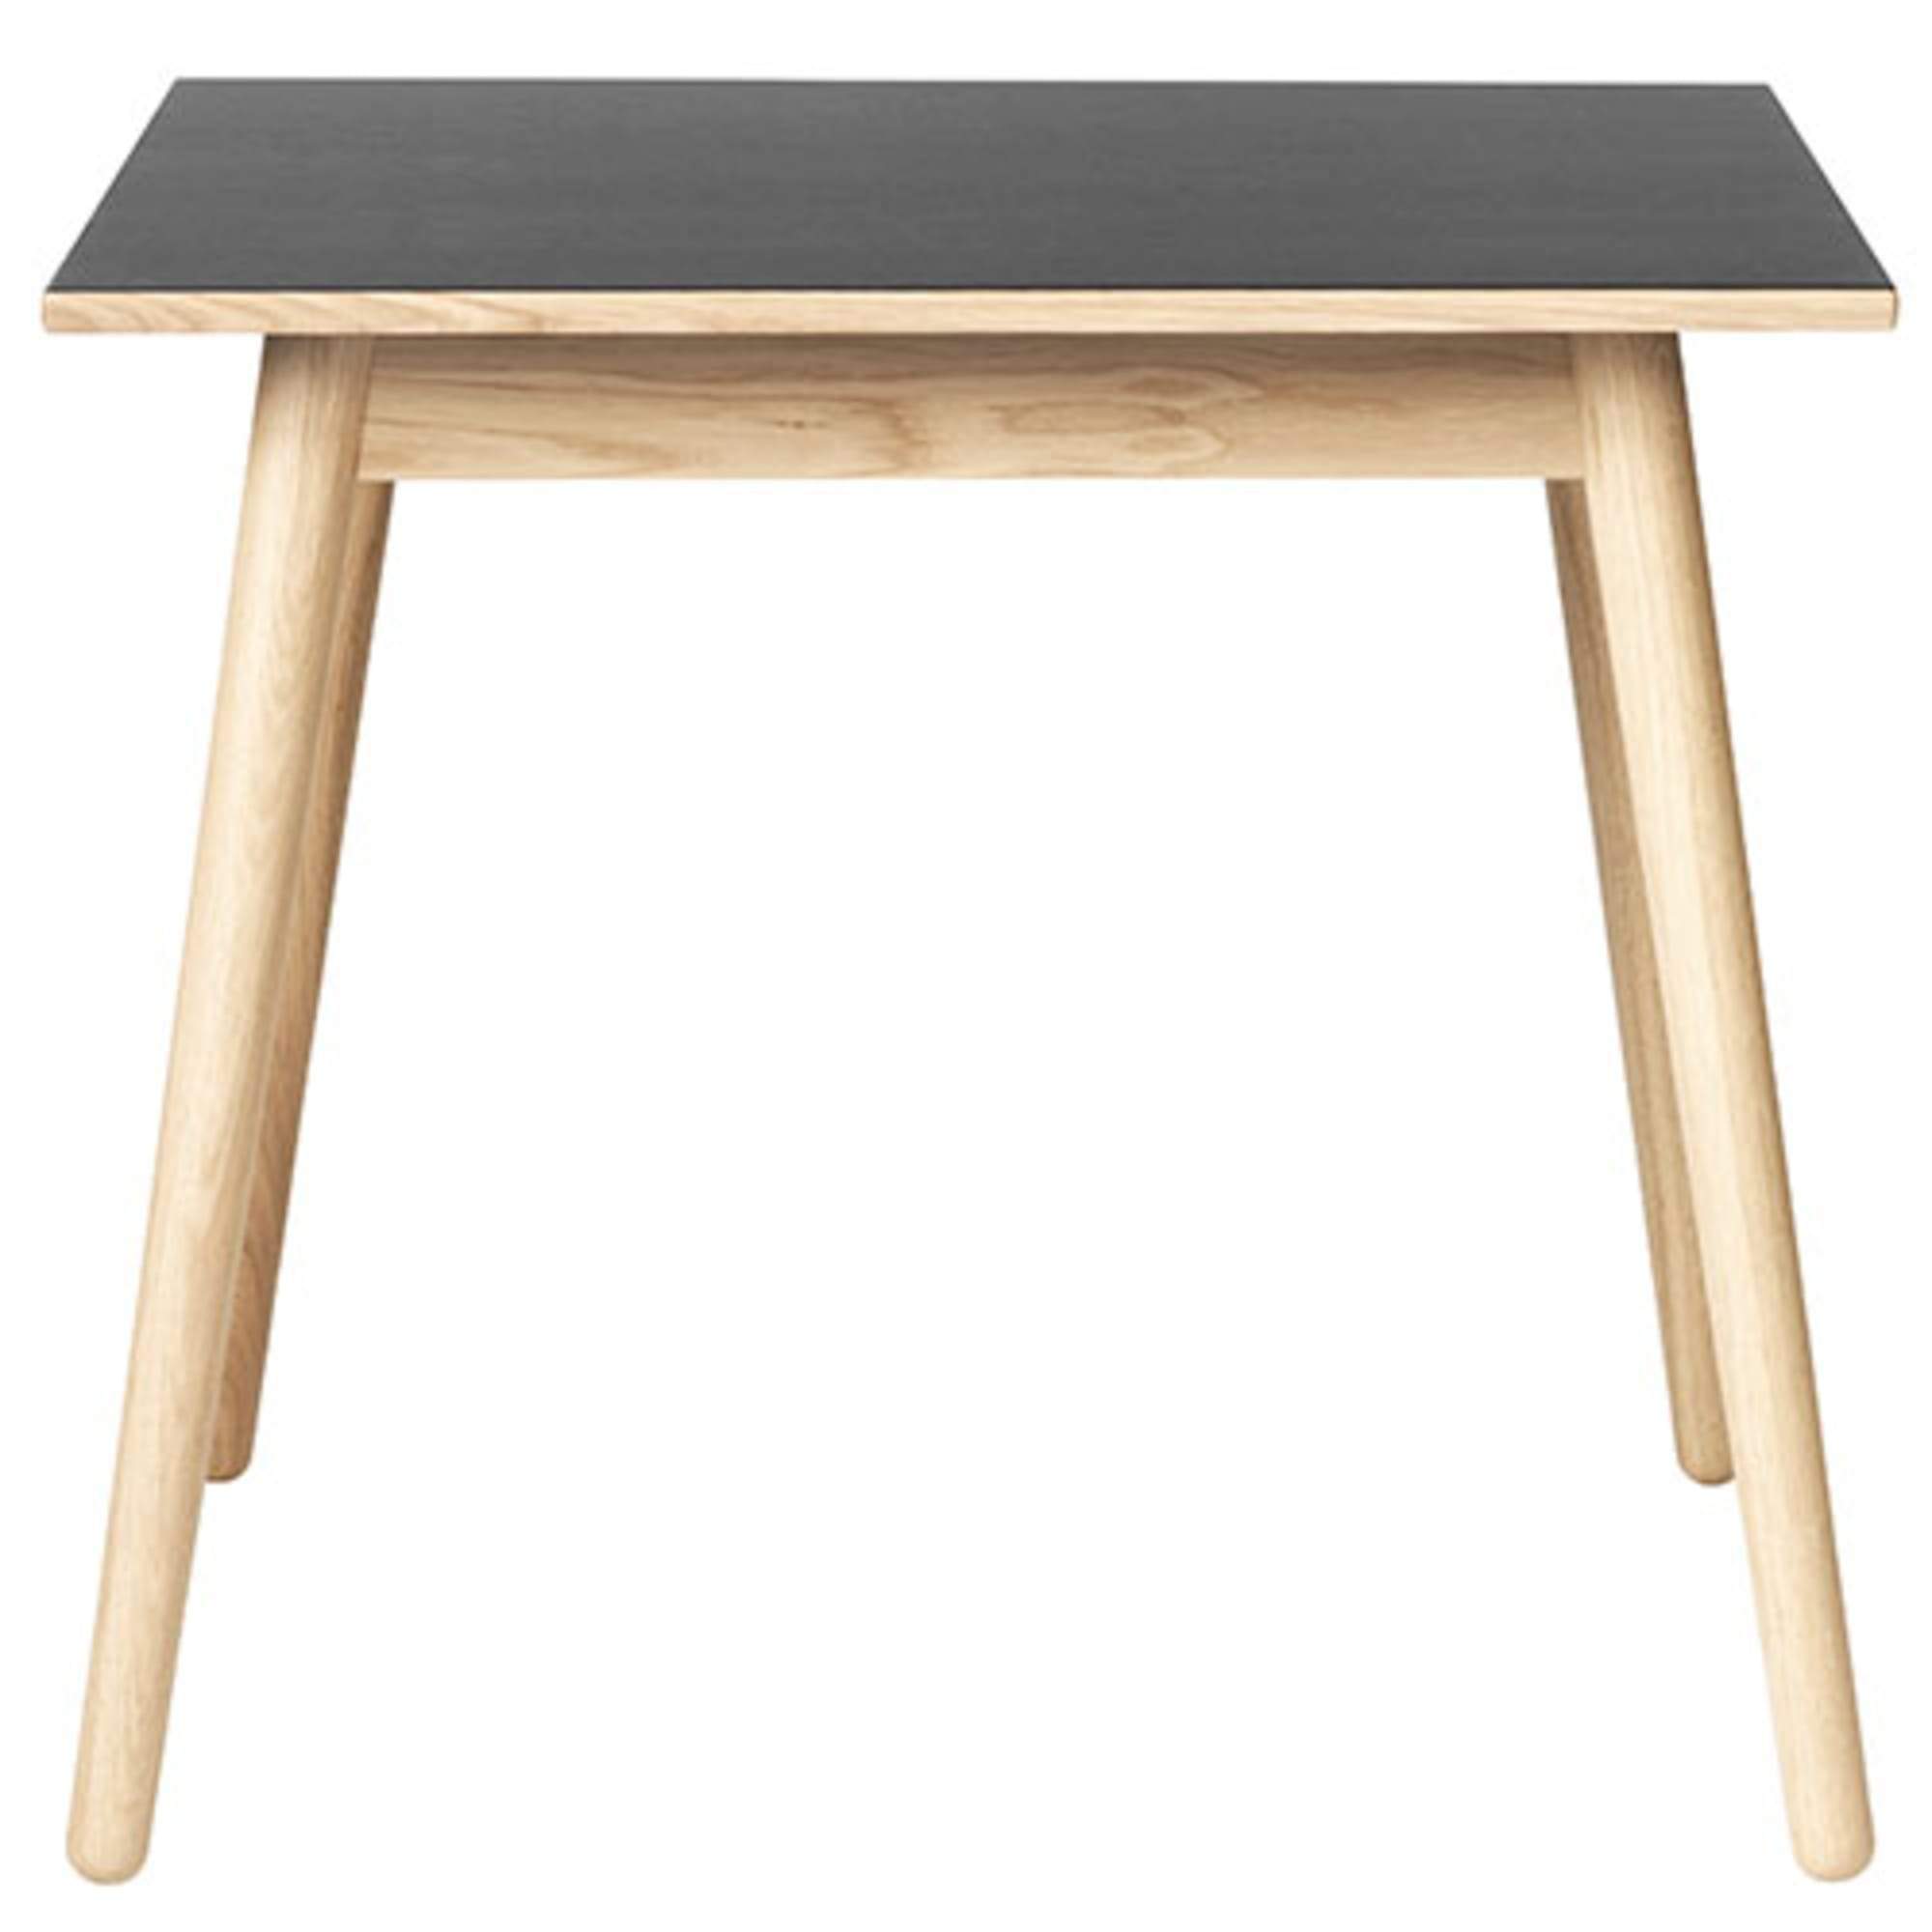 FDB Møbler C35 Jídelní stůl dub, černý linoleum stůl, 82x82cm